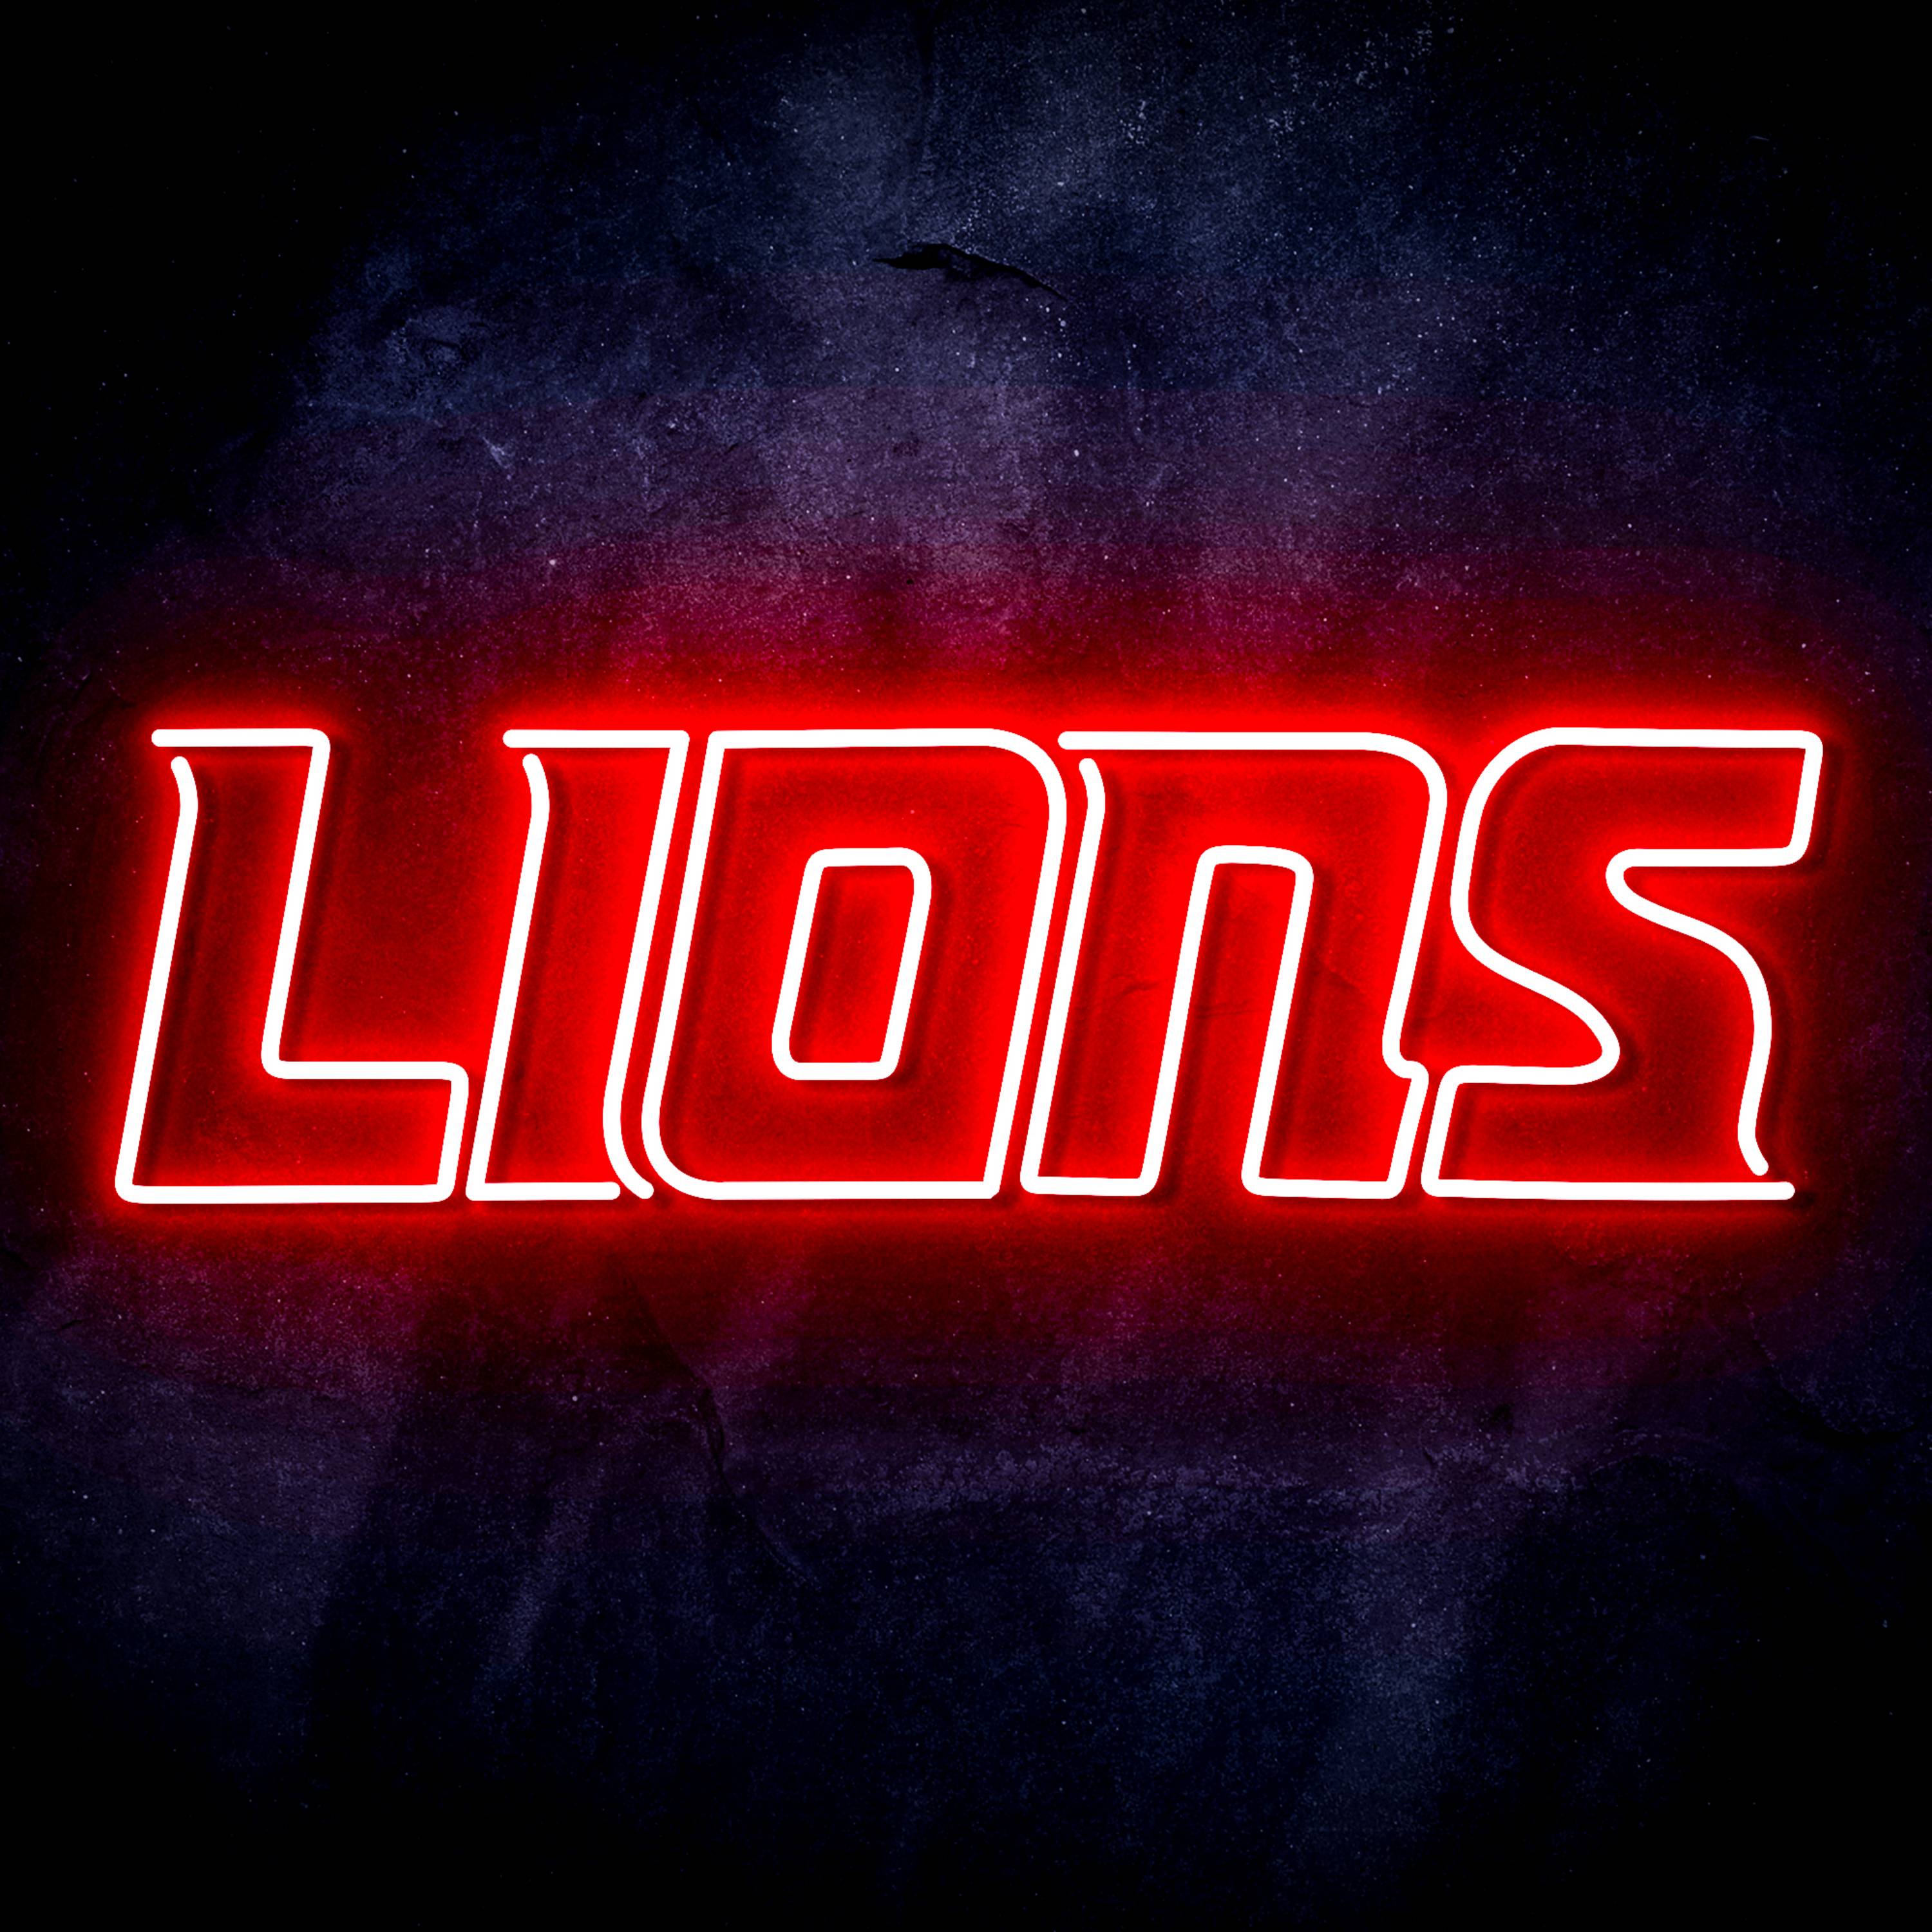 NFL LIONS LED Neon Sign